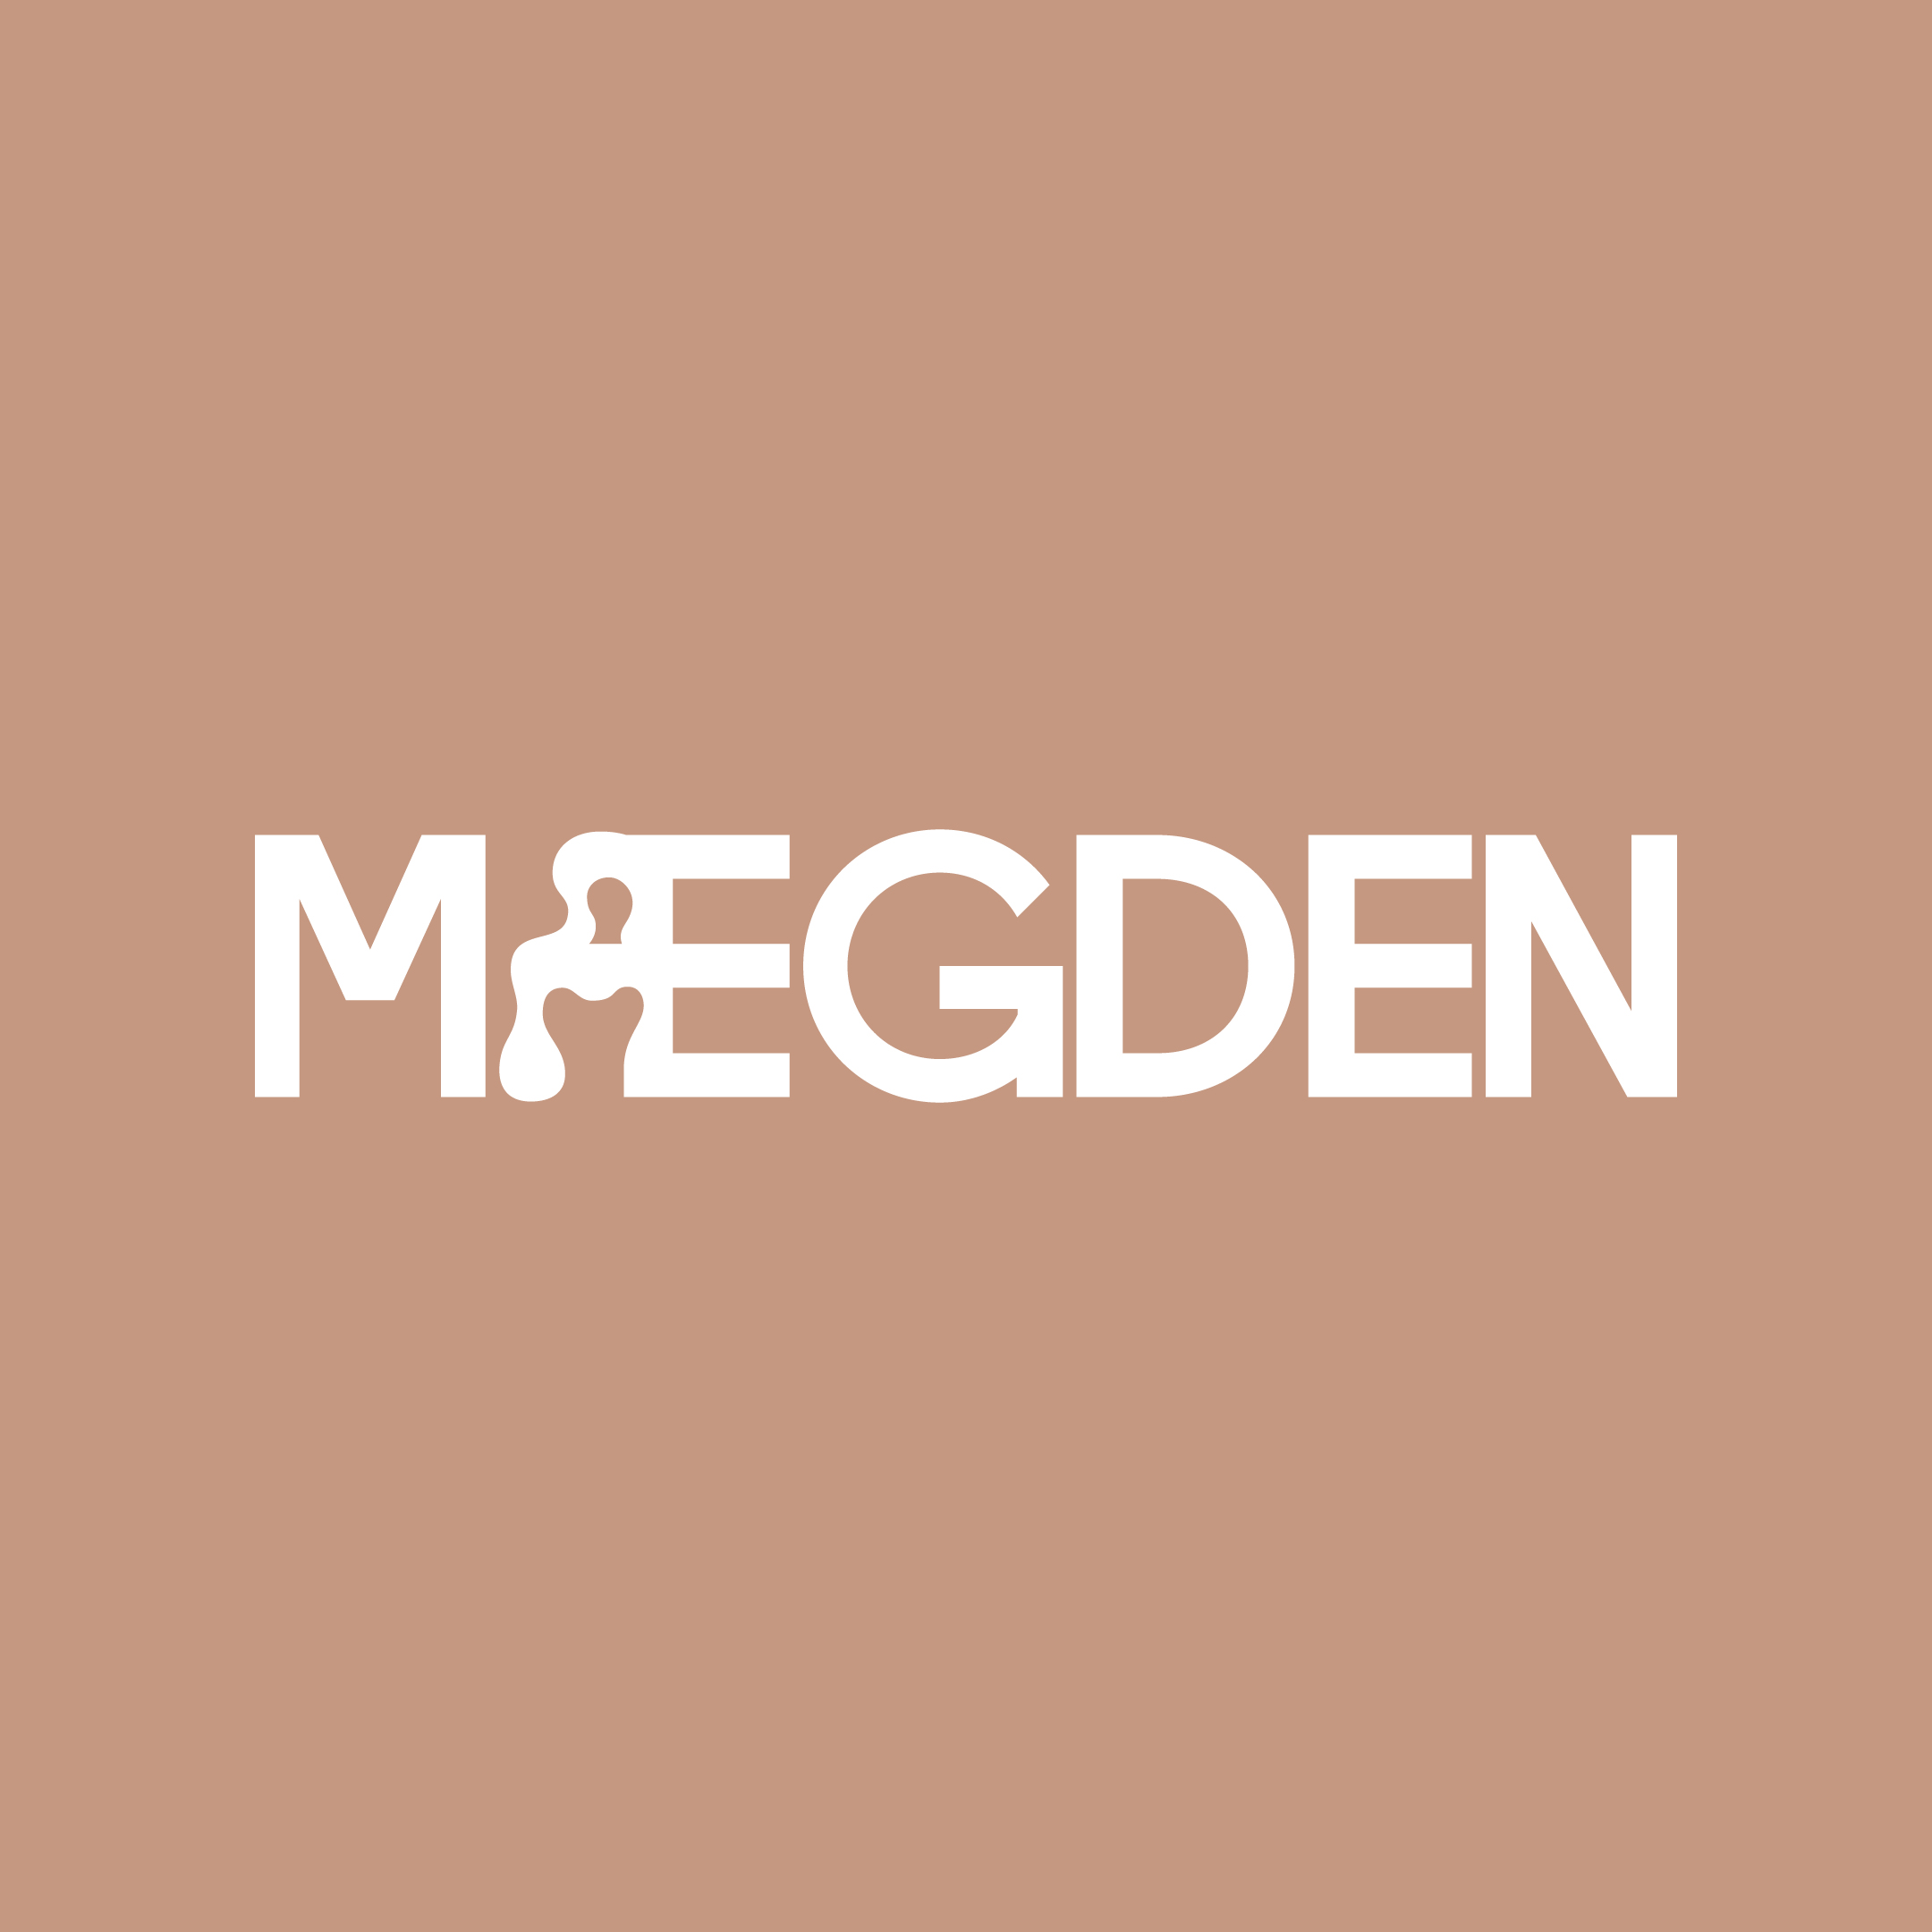 Maegden Image